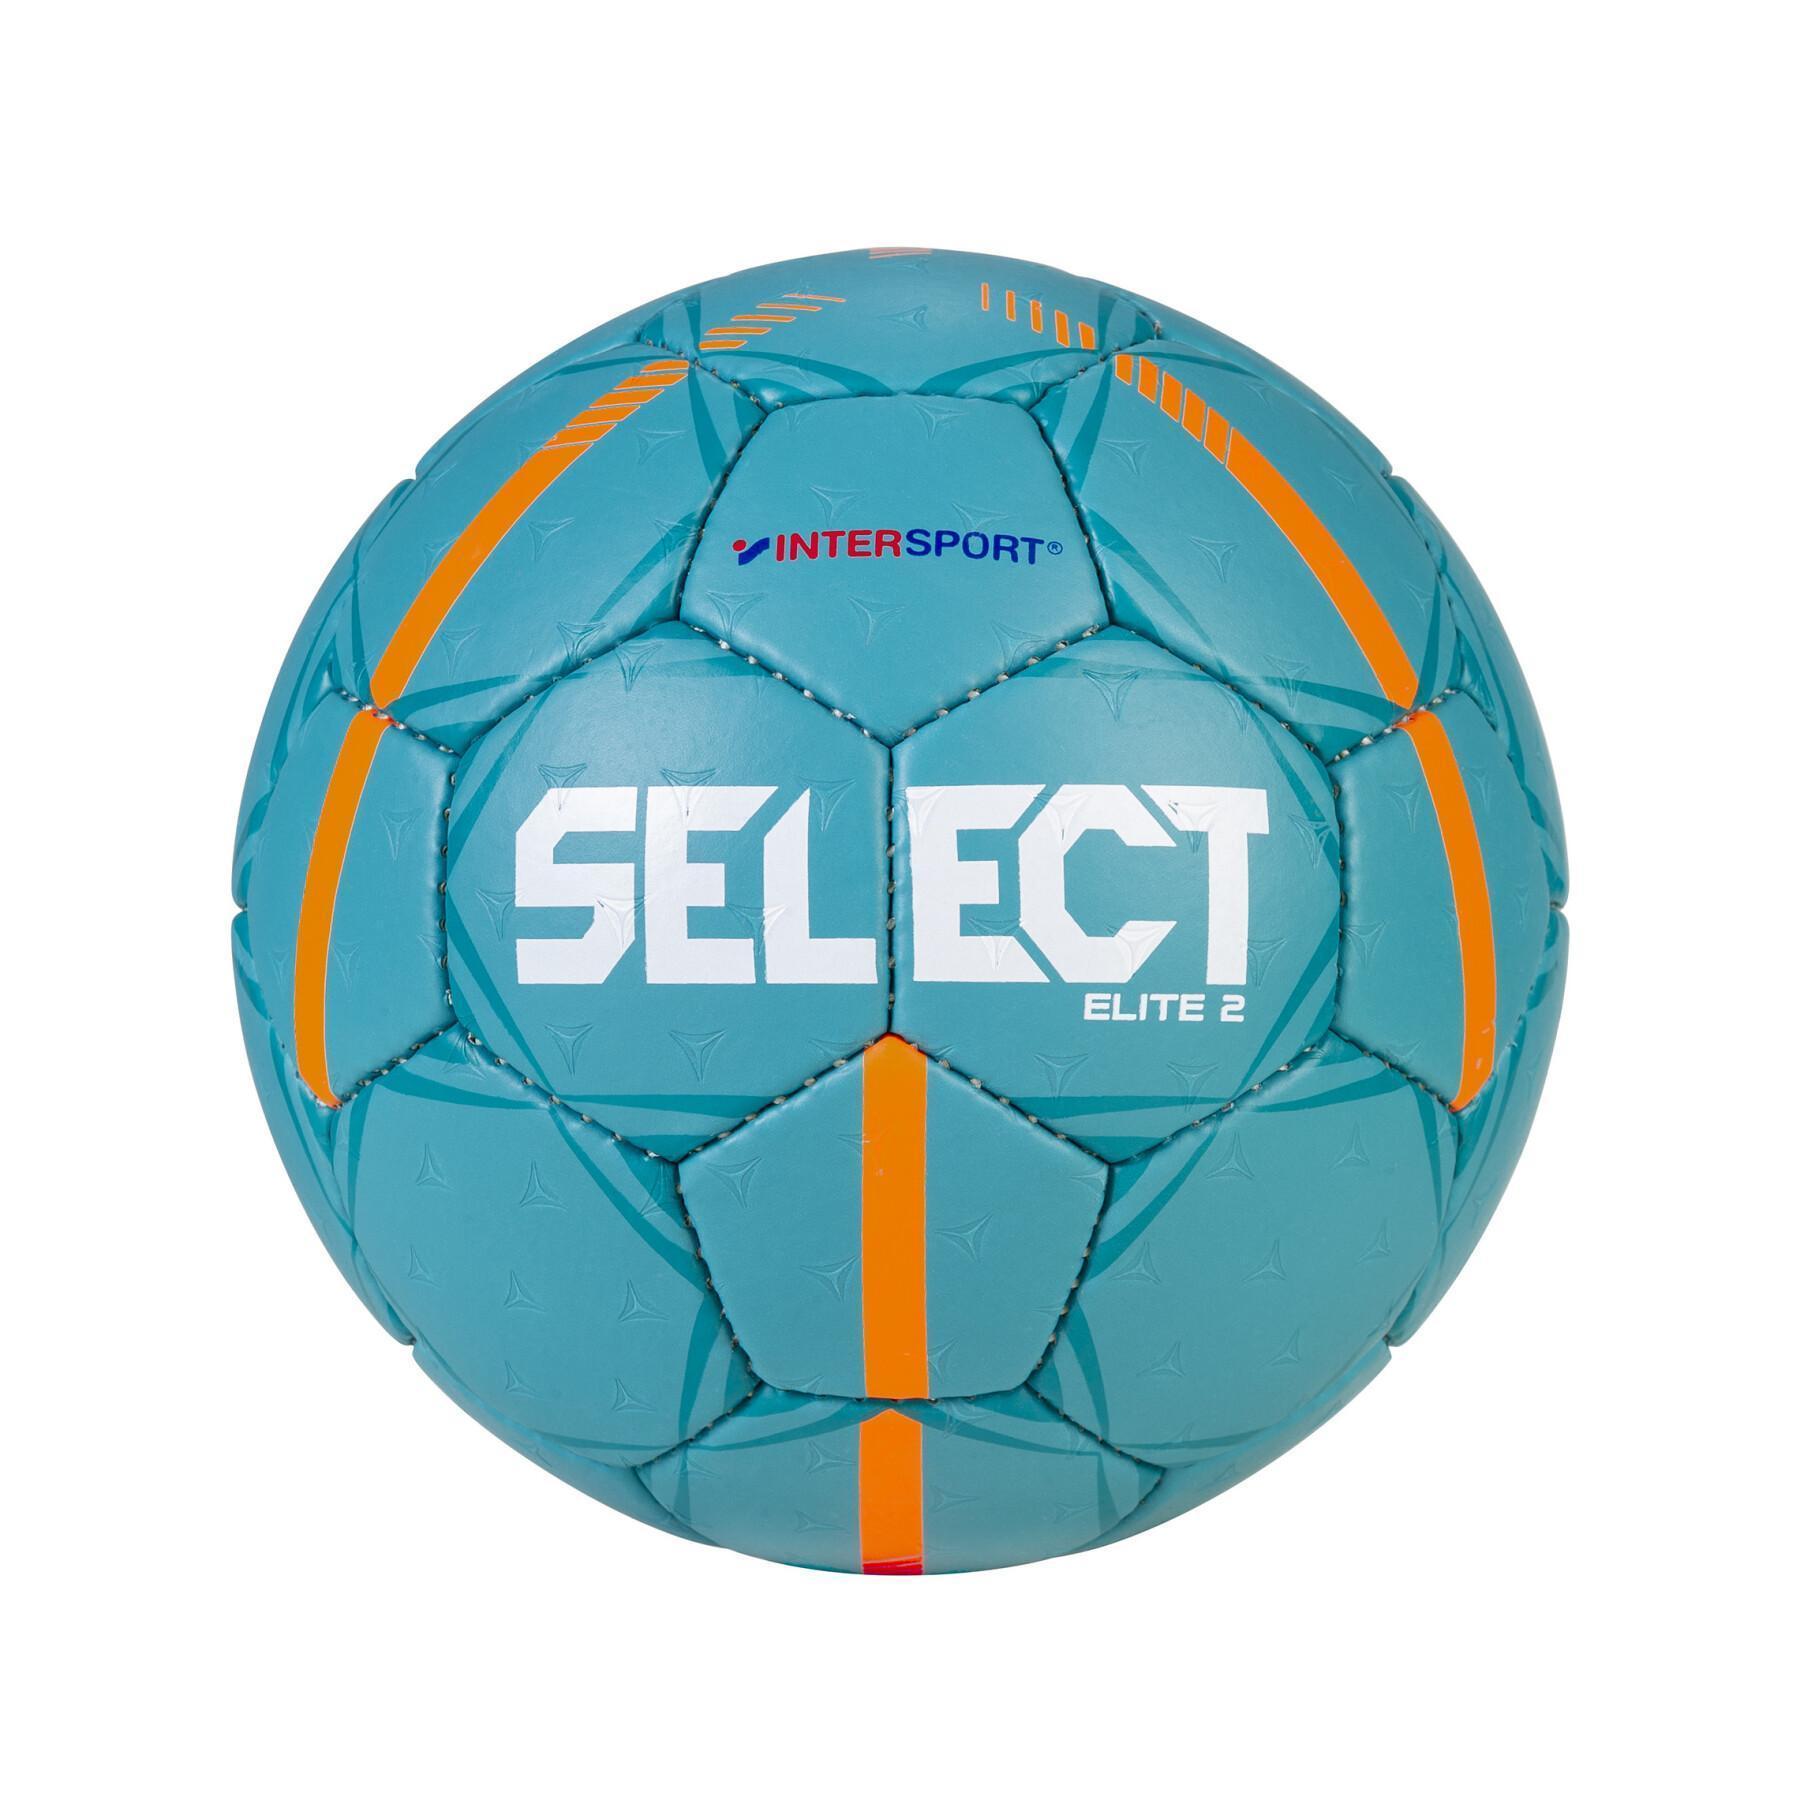 Ballong Select Elite 2 Intersport